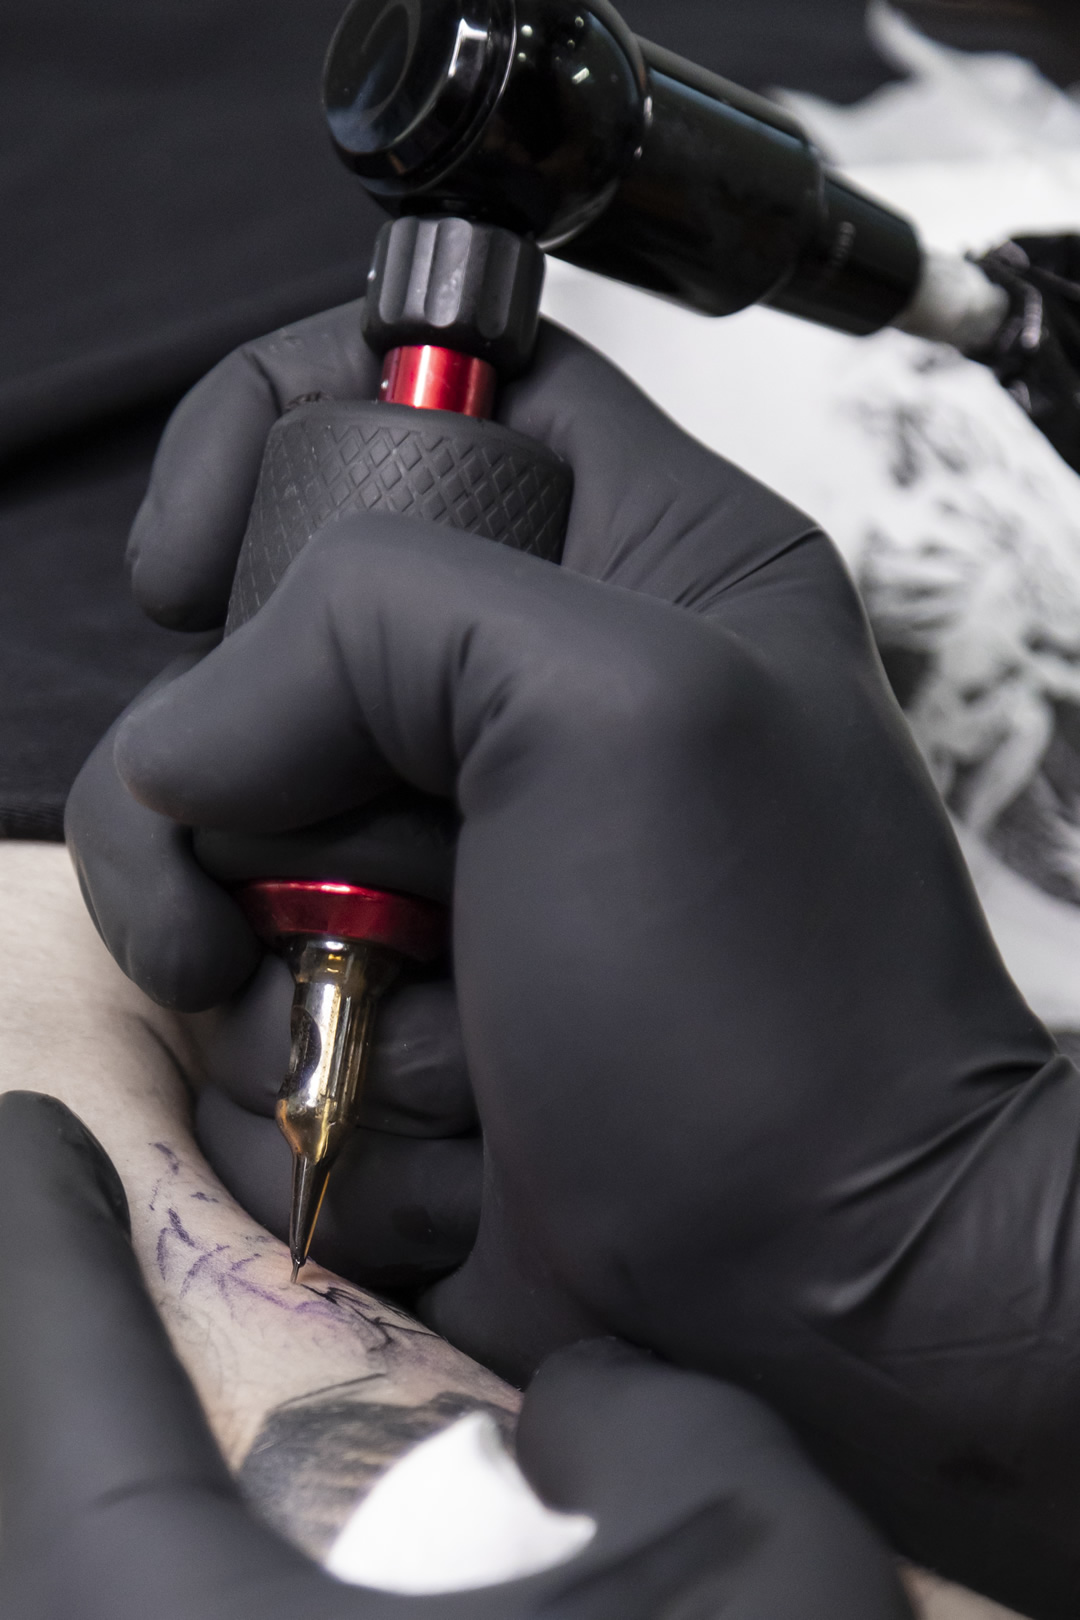 Tattoo Home - Coworking para tatuadores y alquiler de salas para el tatuaje profesional